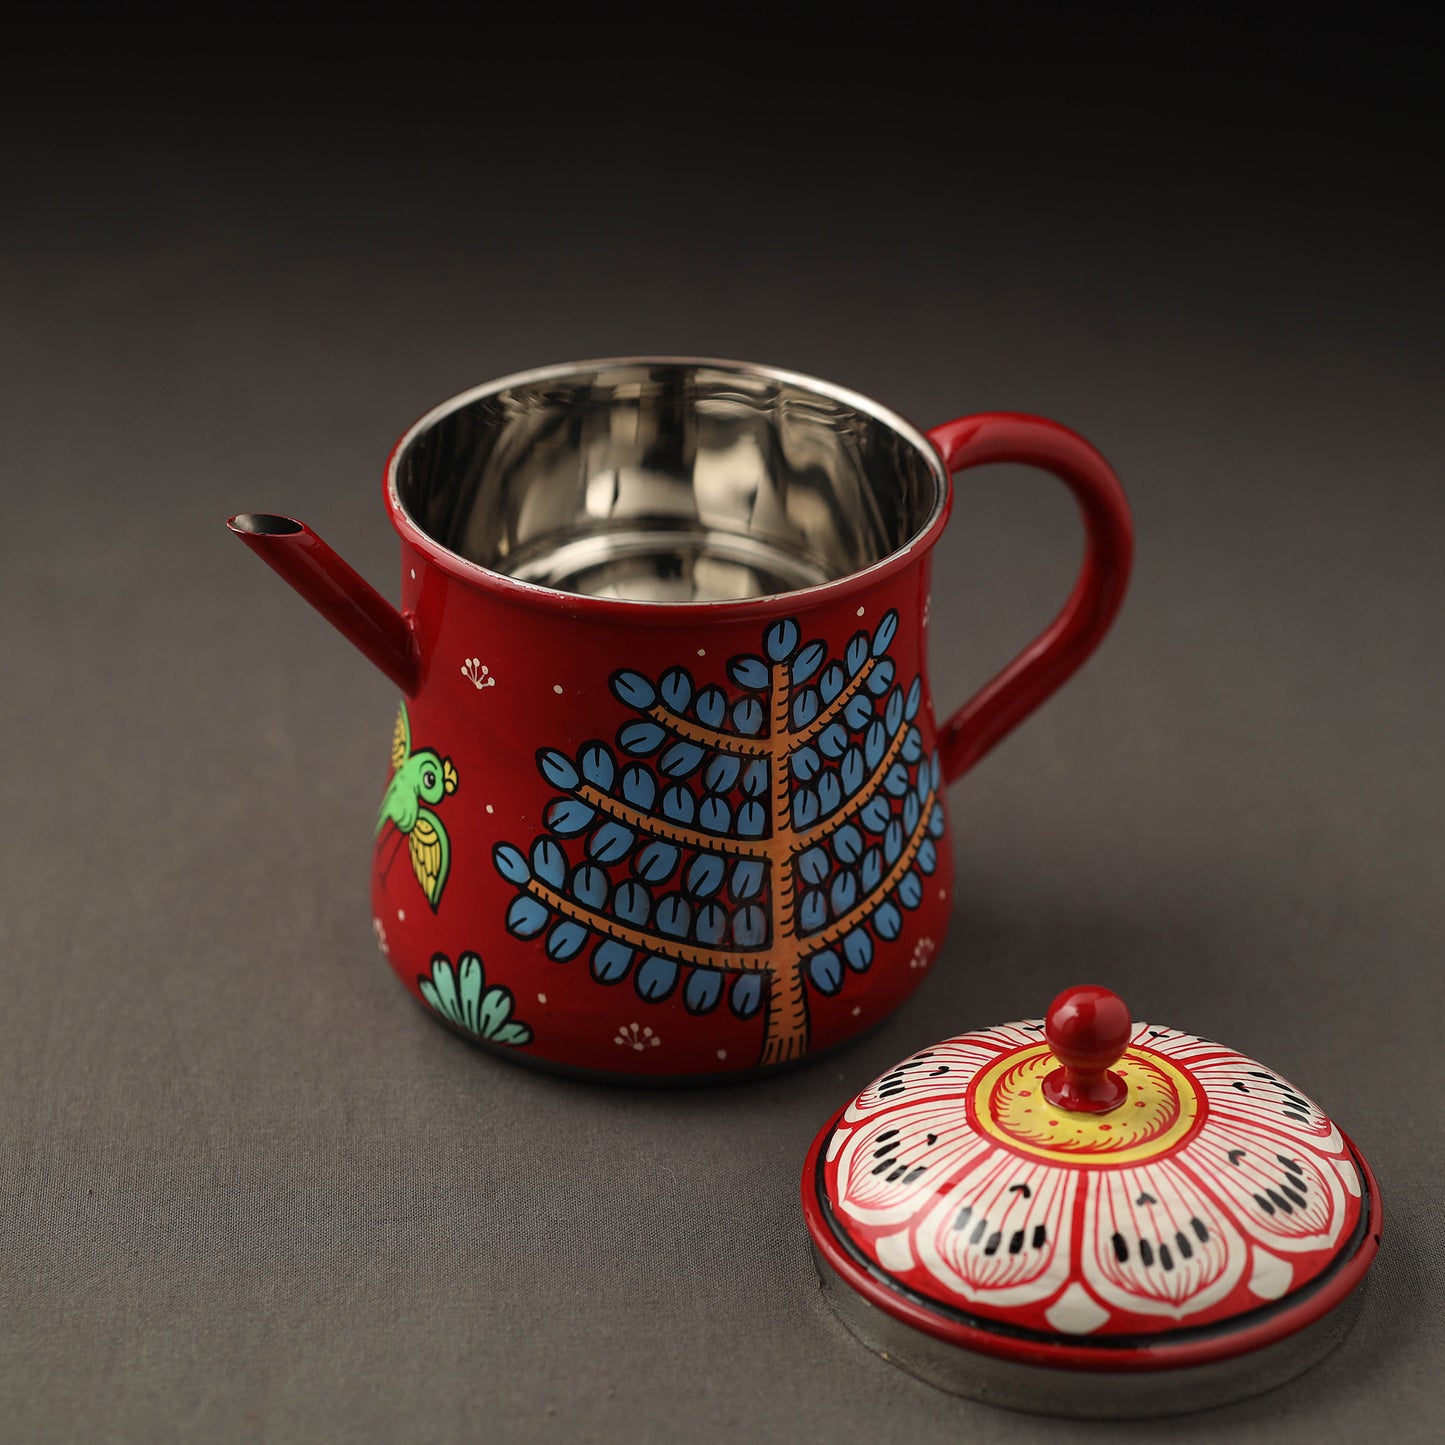 Odisha Pattachitra Handpainted Stainless Steel Tea Pot (500ml)